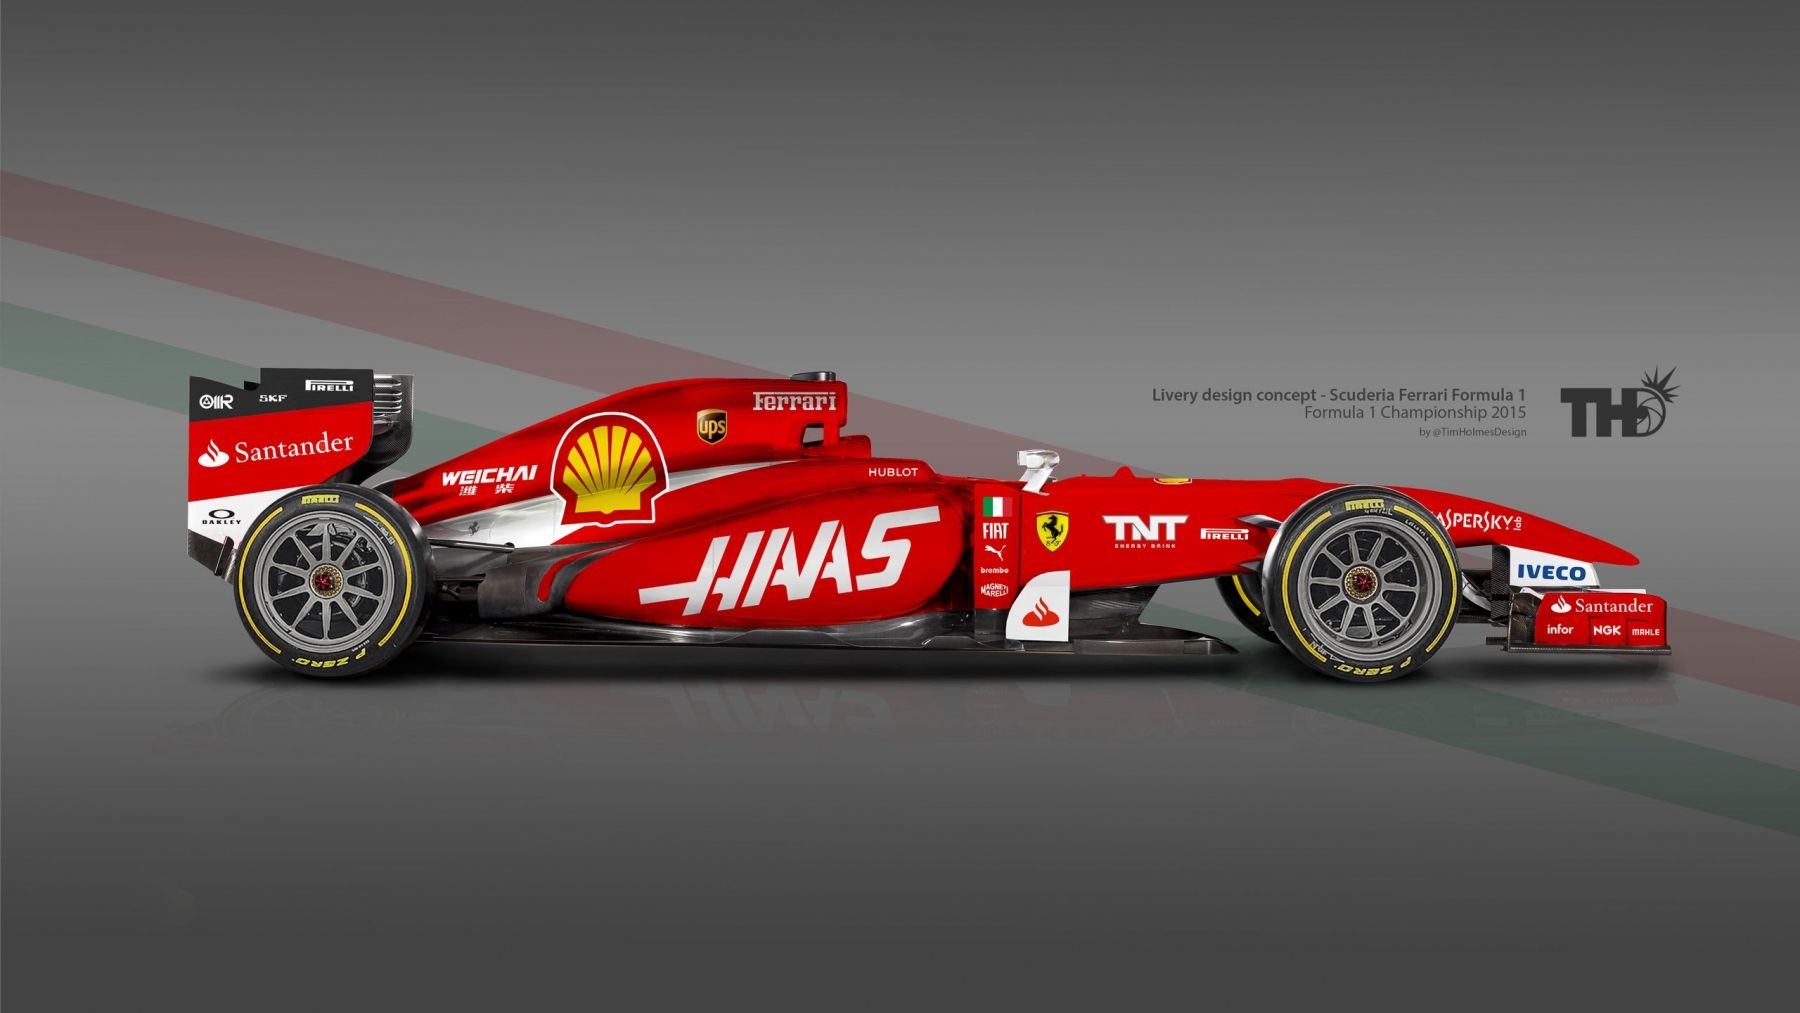 F1 Ferrari HD Wallpaper and Background Image. Photo. Picture